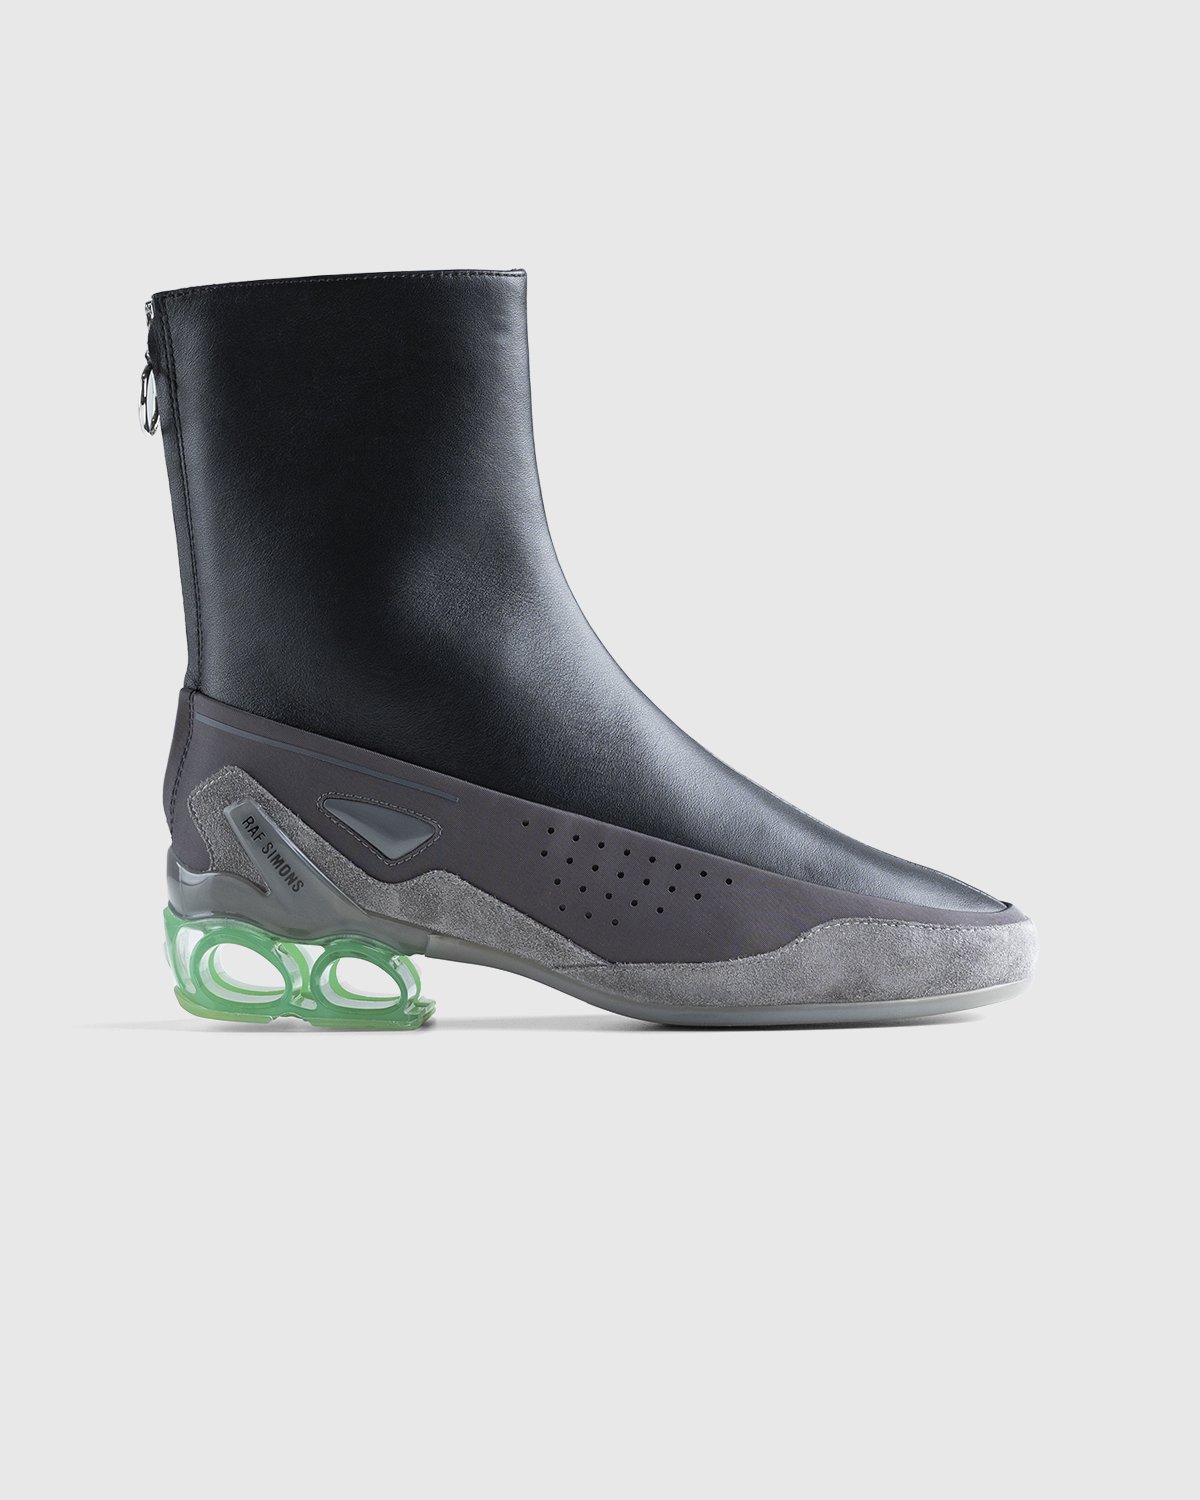 Raf Simons - Cycloid 4 Black Grey Green - Footwear - Black - Image 1